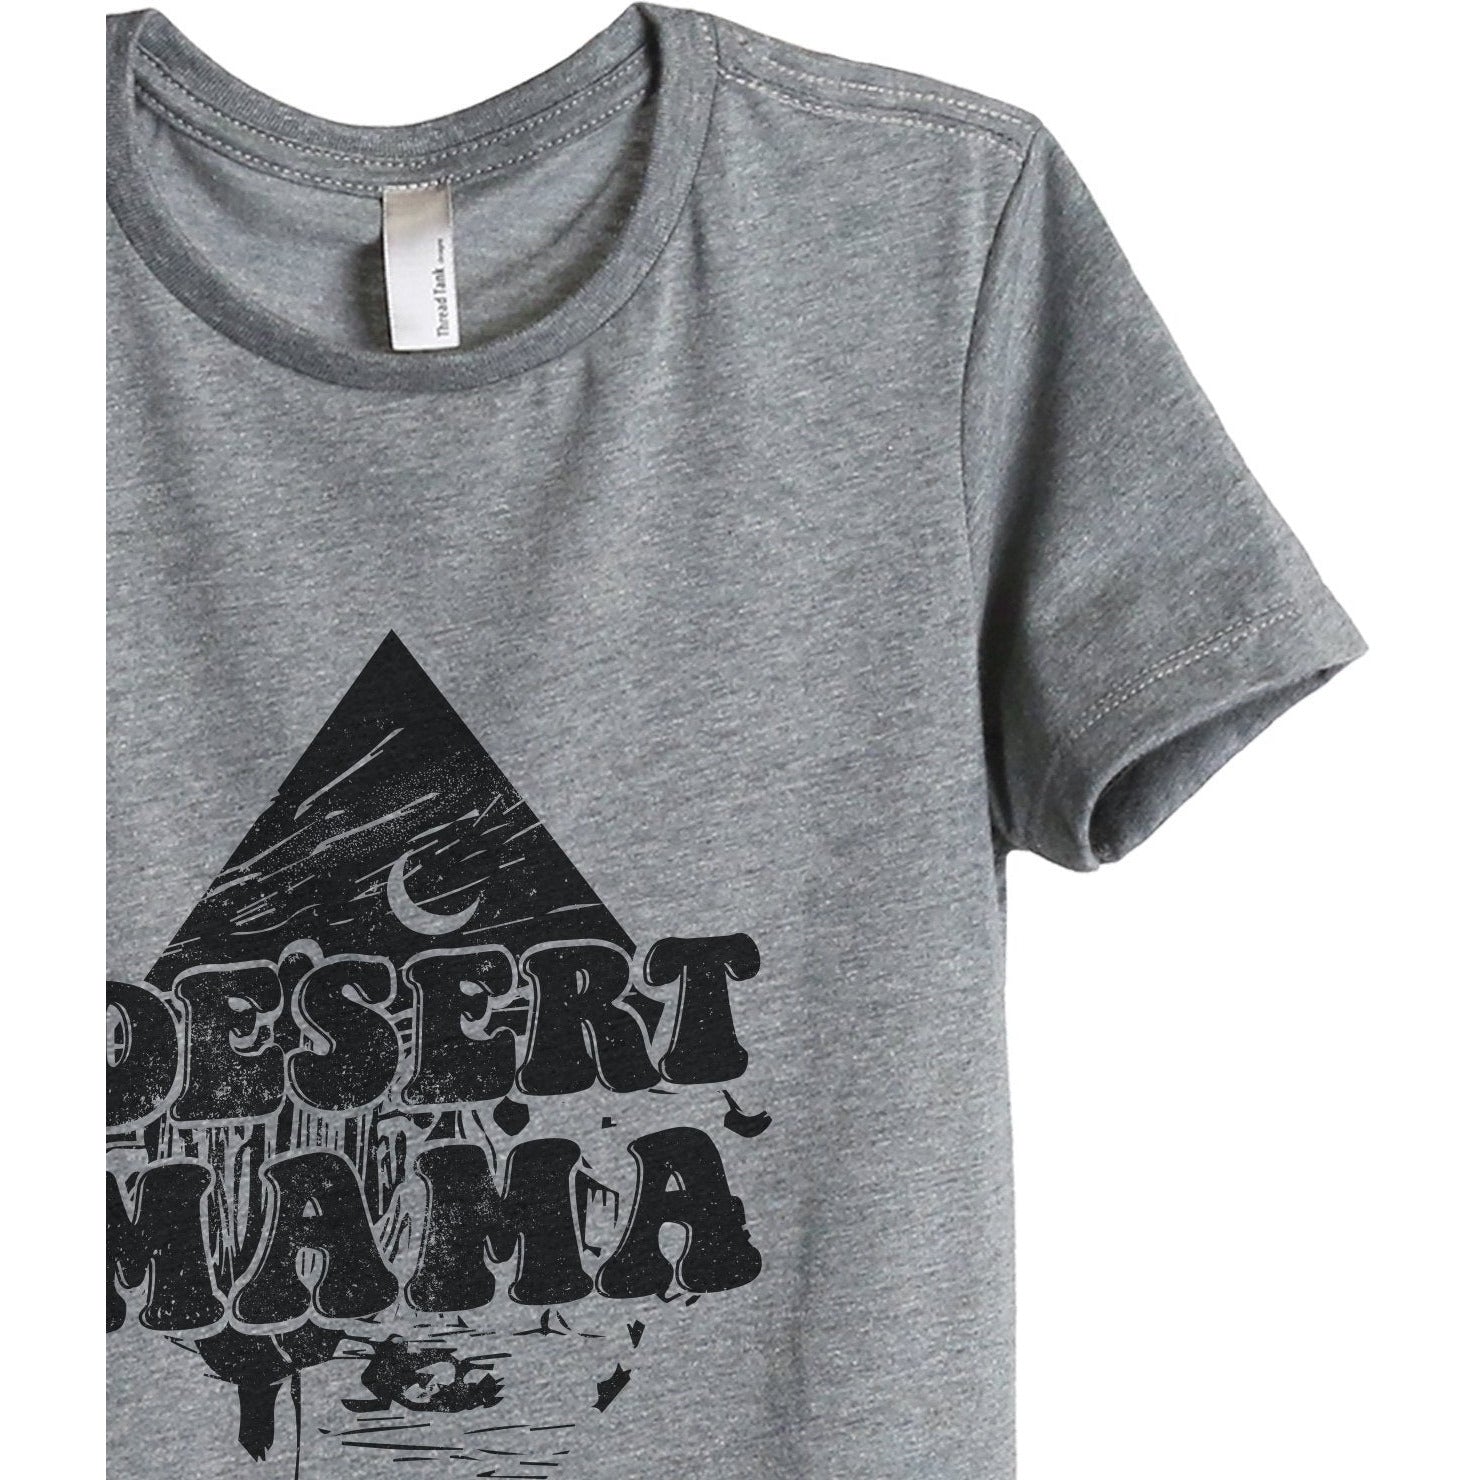 Desert Mama Women's Relaxed Crewneck T-Shirt Top Tee Heather Grey Closeup Details